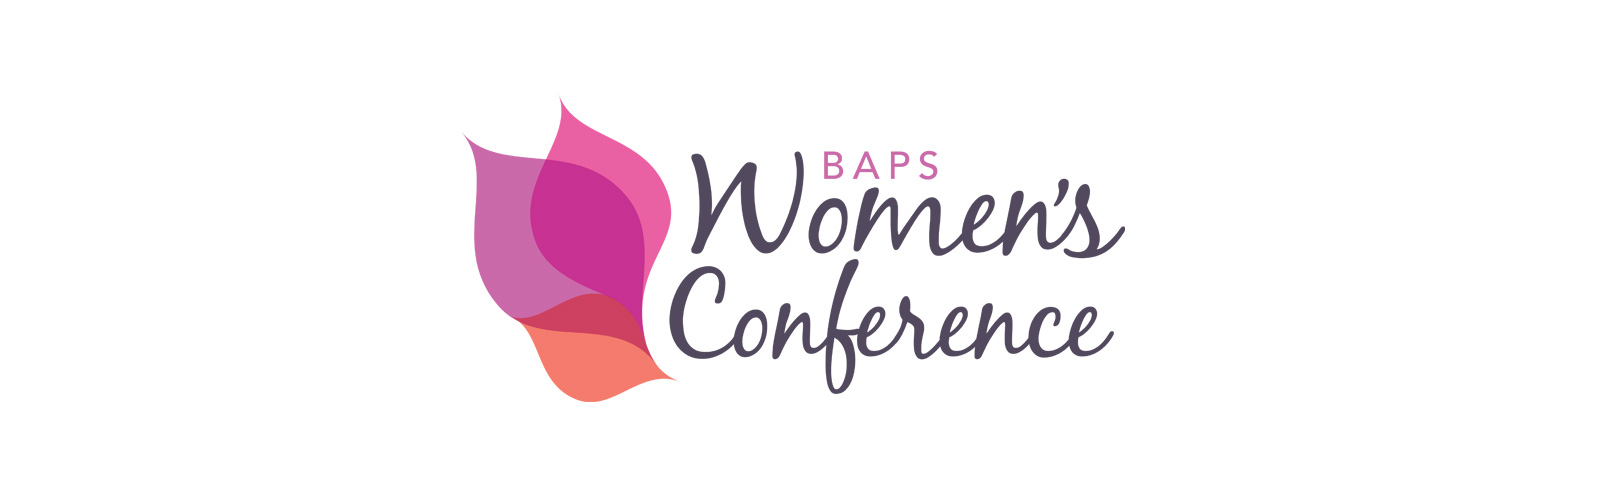 BAPS Women's Conference Boston, MA BAPS Swaminarayan Sanstha